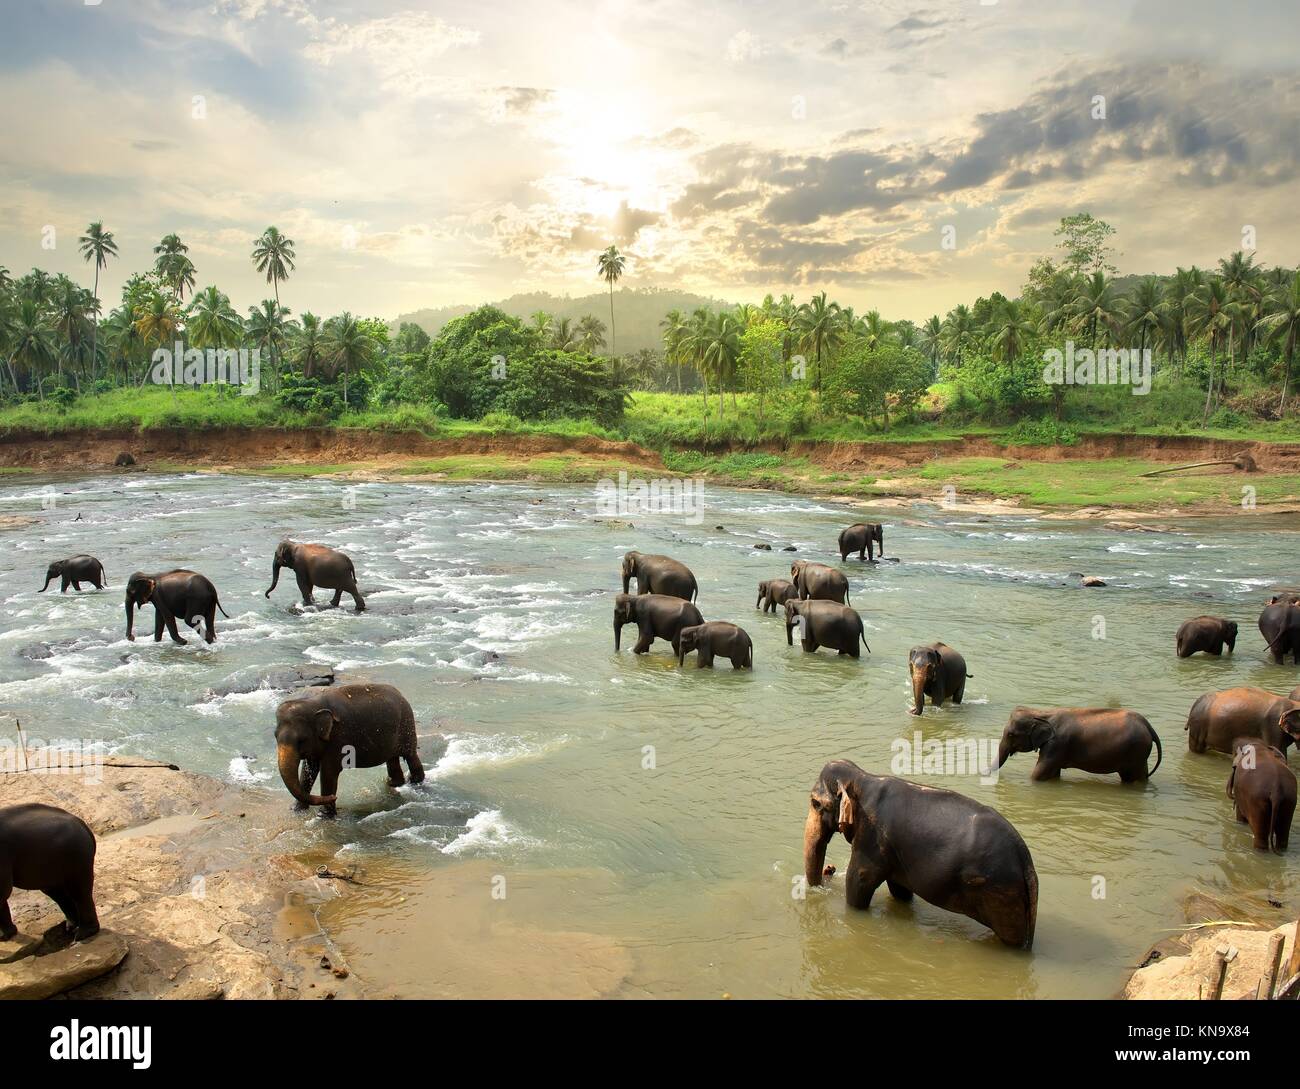 Elephants in water of jungle river, Sri Lanka. Stock Photo